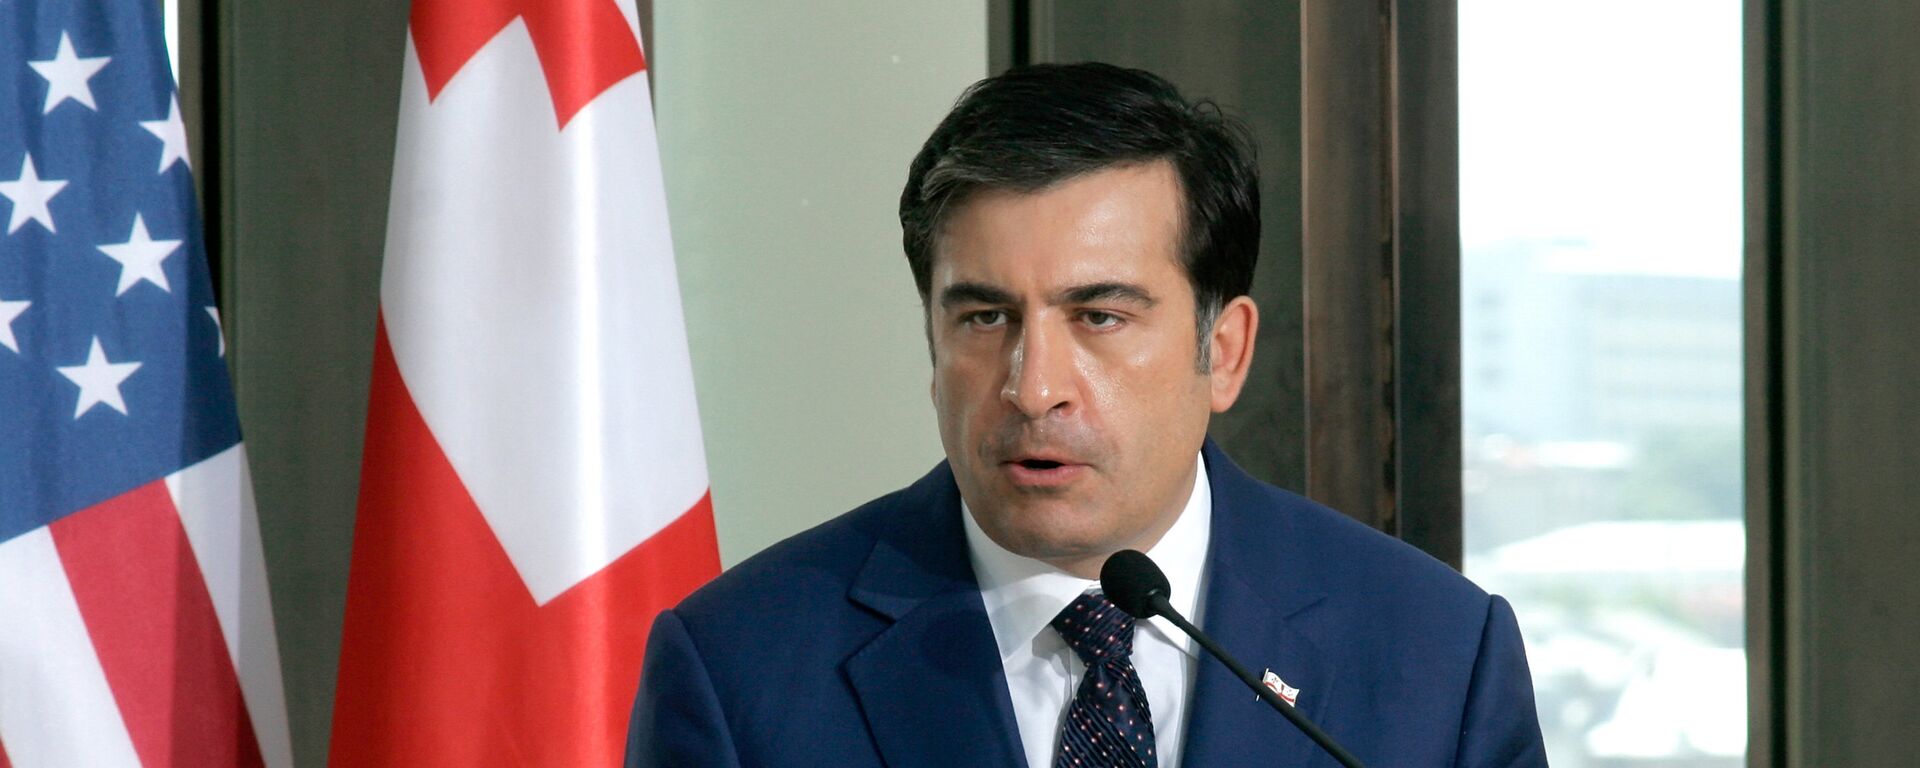 Mijaíl Saakashvili, expresidente de Georgia (Archivo) - Sputnik Mundo, 1920, 14.06.2017